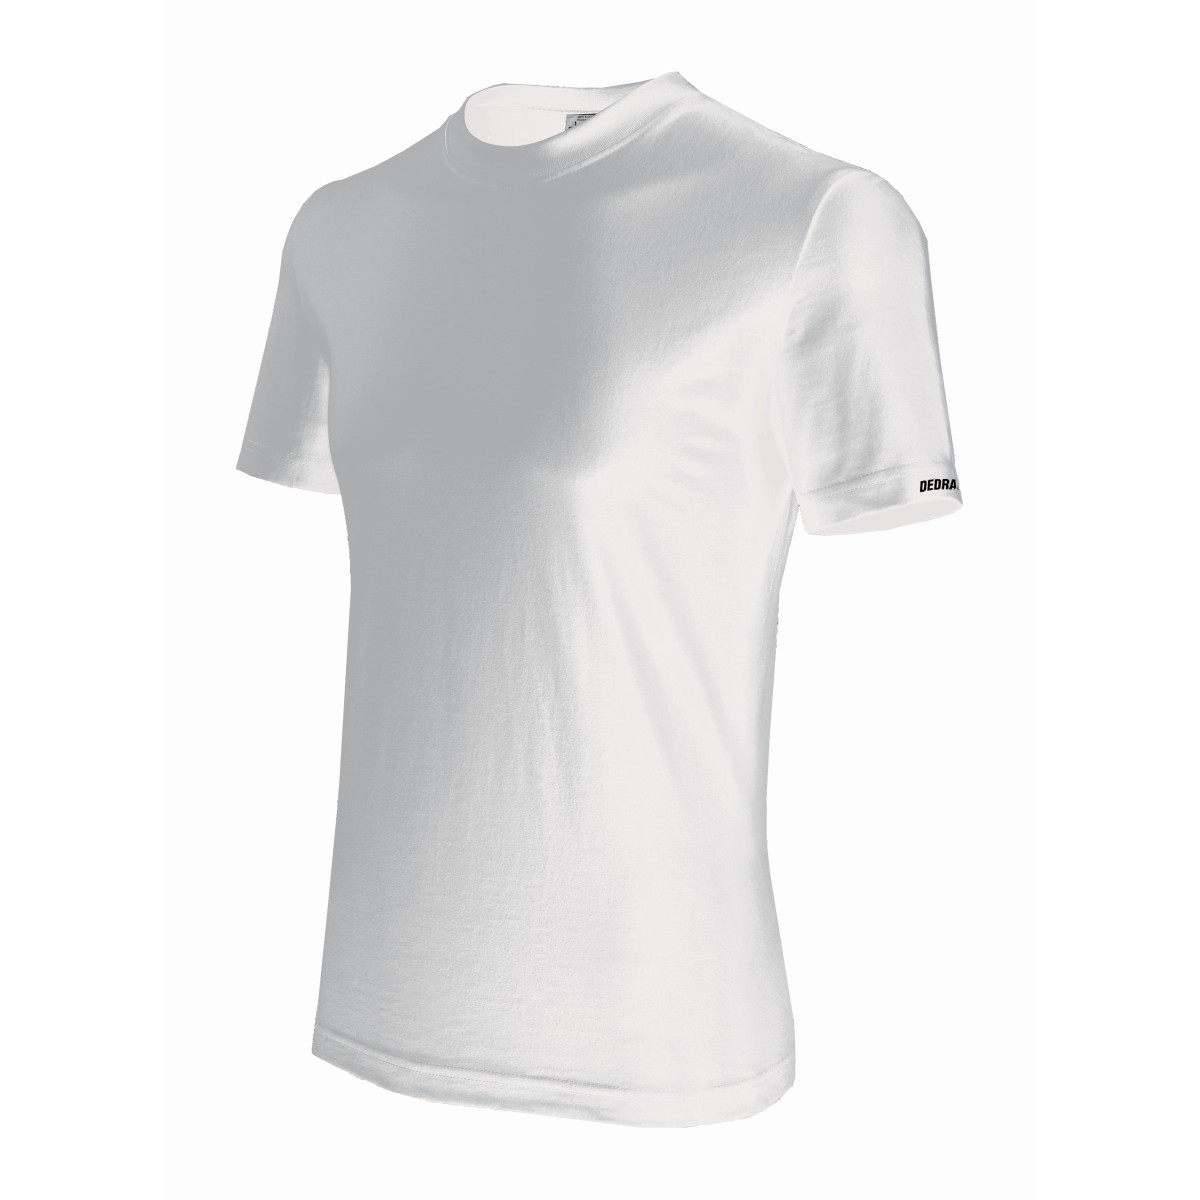 Tričko pánské XL, bílý, 100 % bavlna DEDRA BH5TW-XL